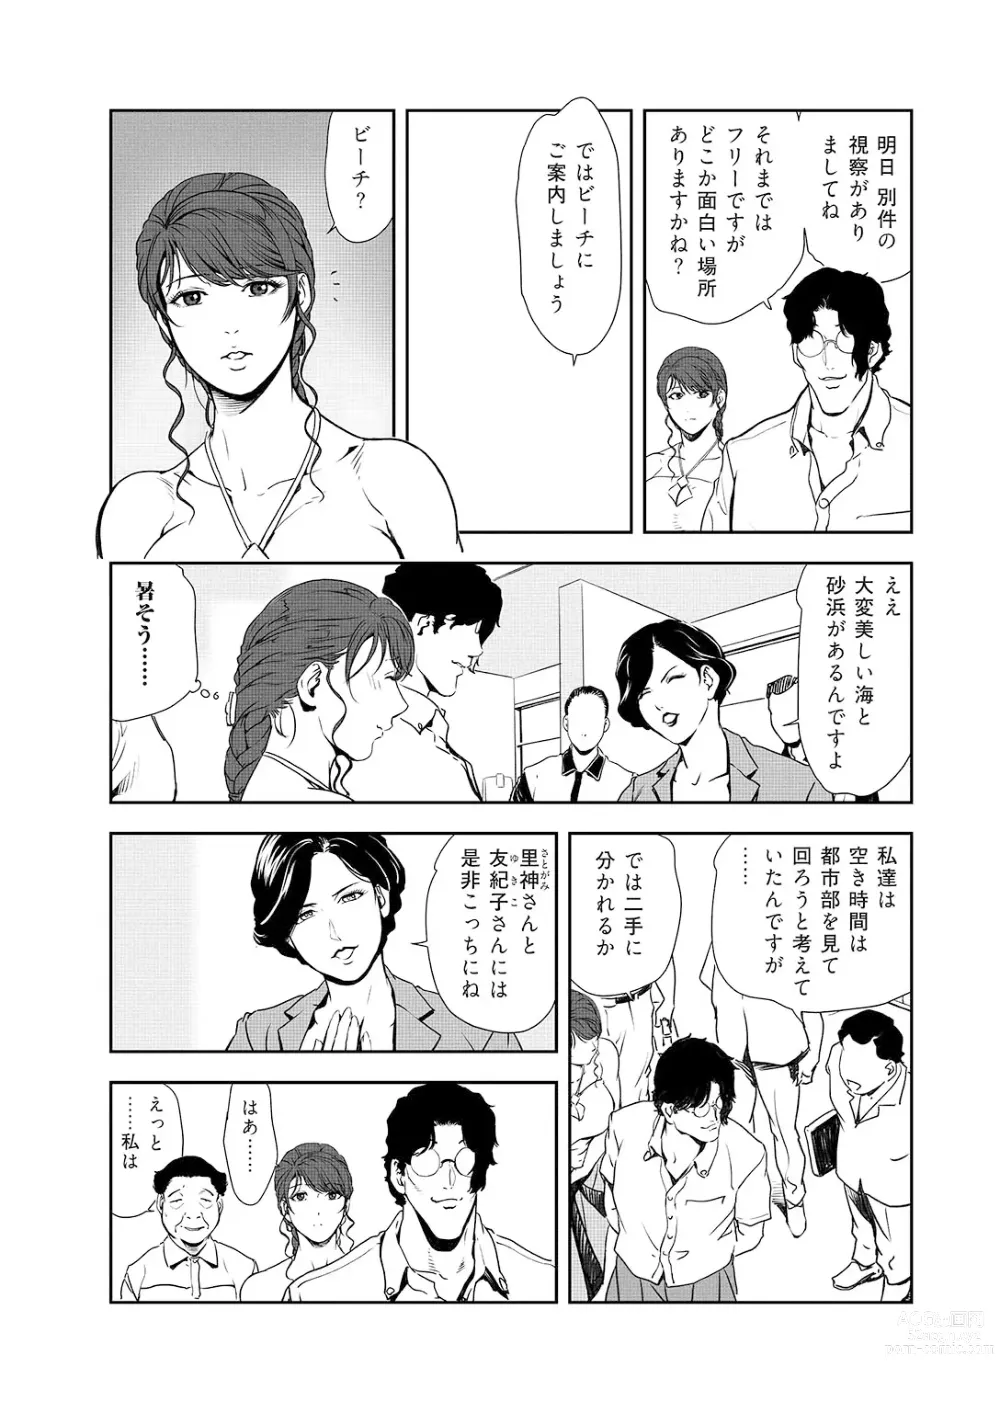 Page 4 of manga Nikuhisyo Yukiko 44